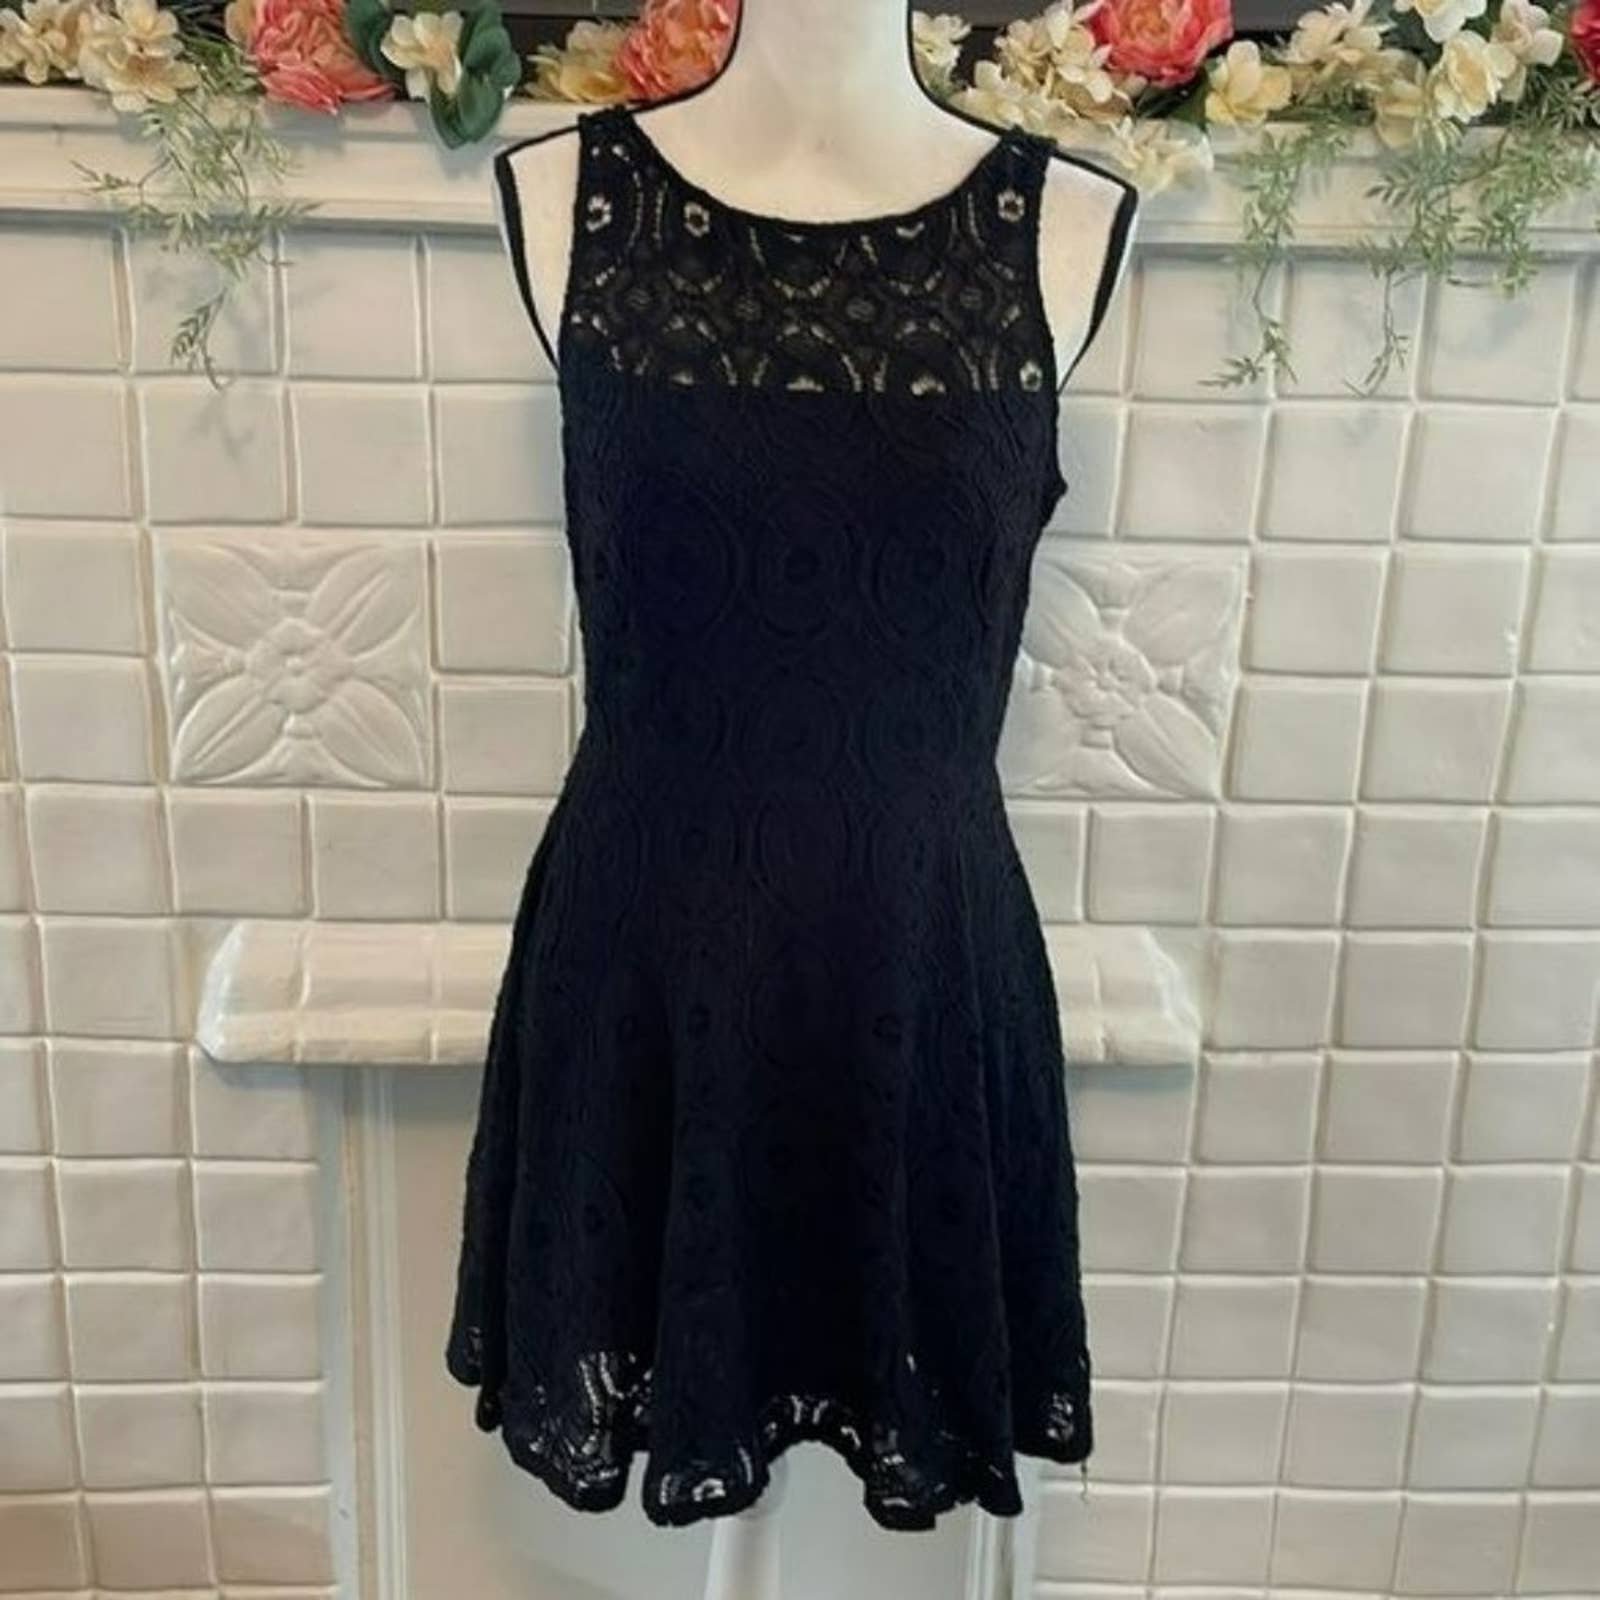 Affordable Helmut Lang Sleeveless Black Lace Dress OOmCCwXkj Cheap